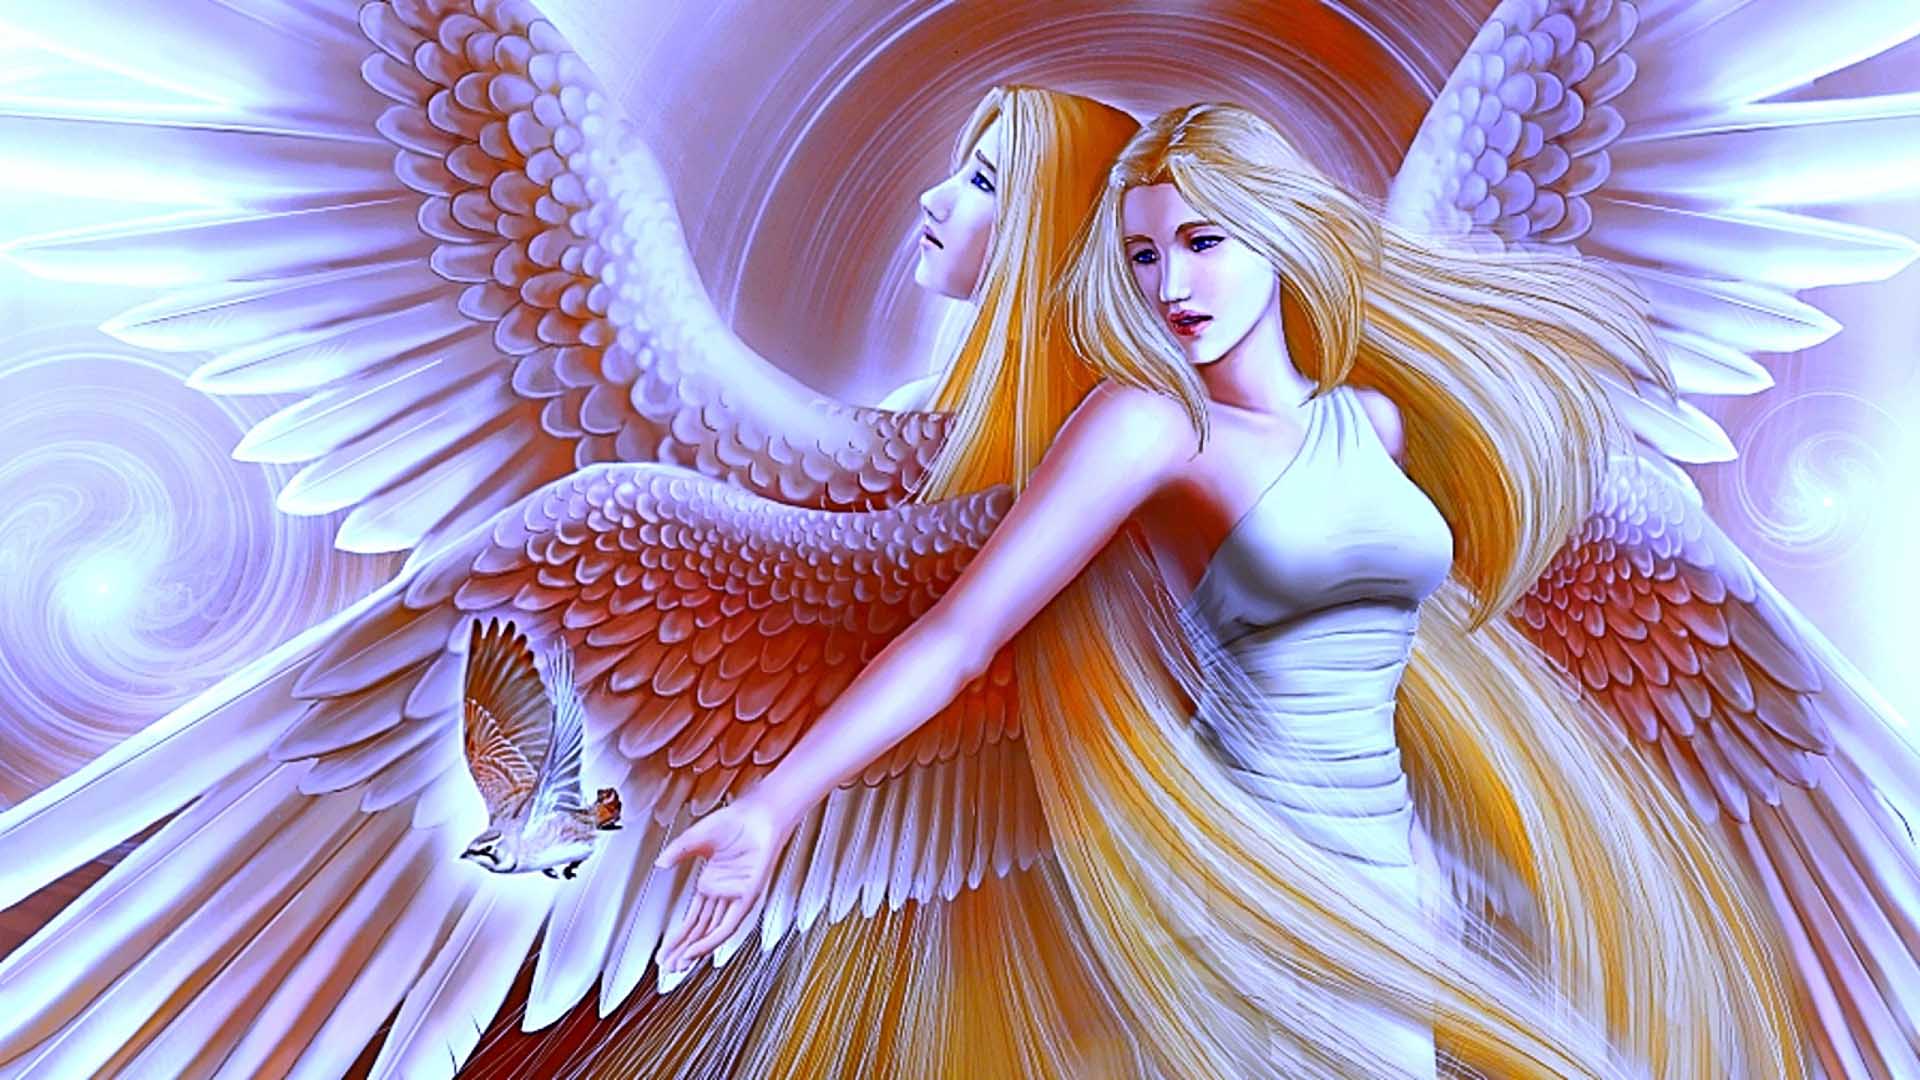 Beautiful Angel Desktop Wallpapers, Beautiful Angel Pictures, New ...